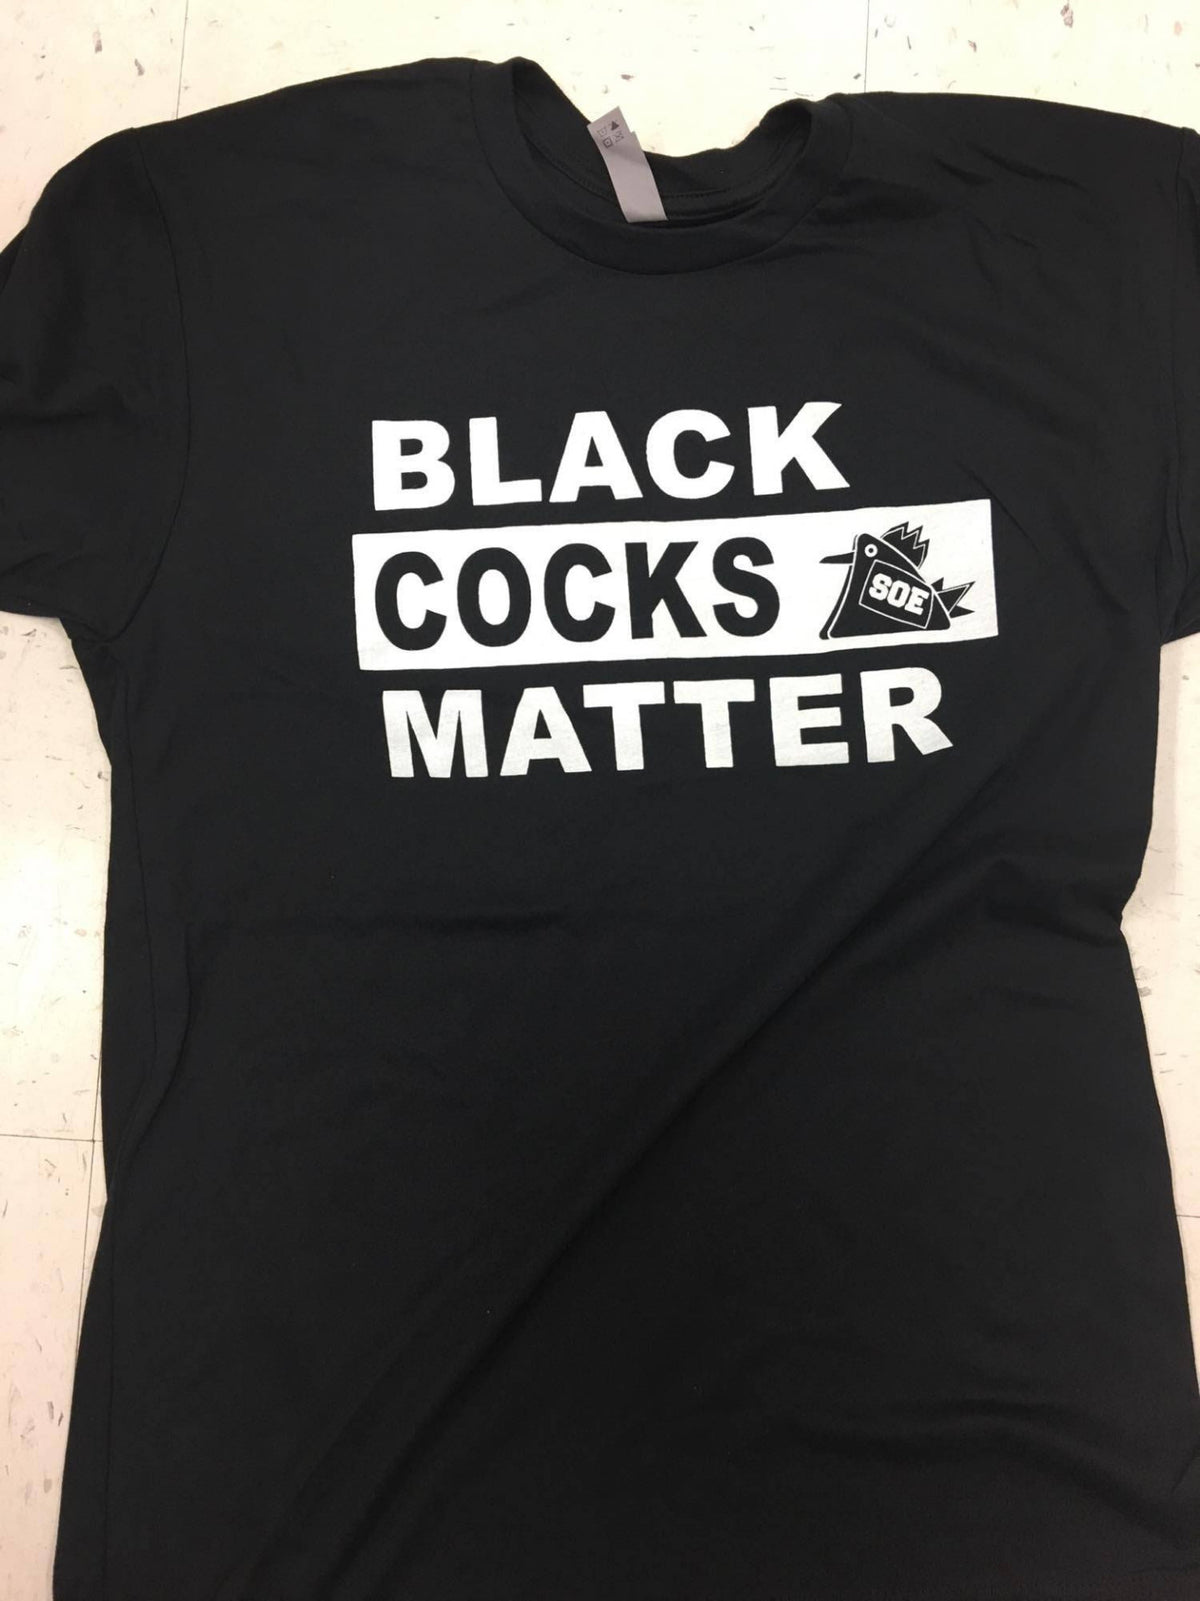 annmarie kearns share black cocks matter shirt photos